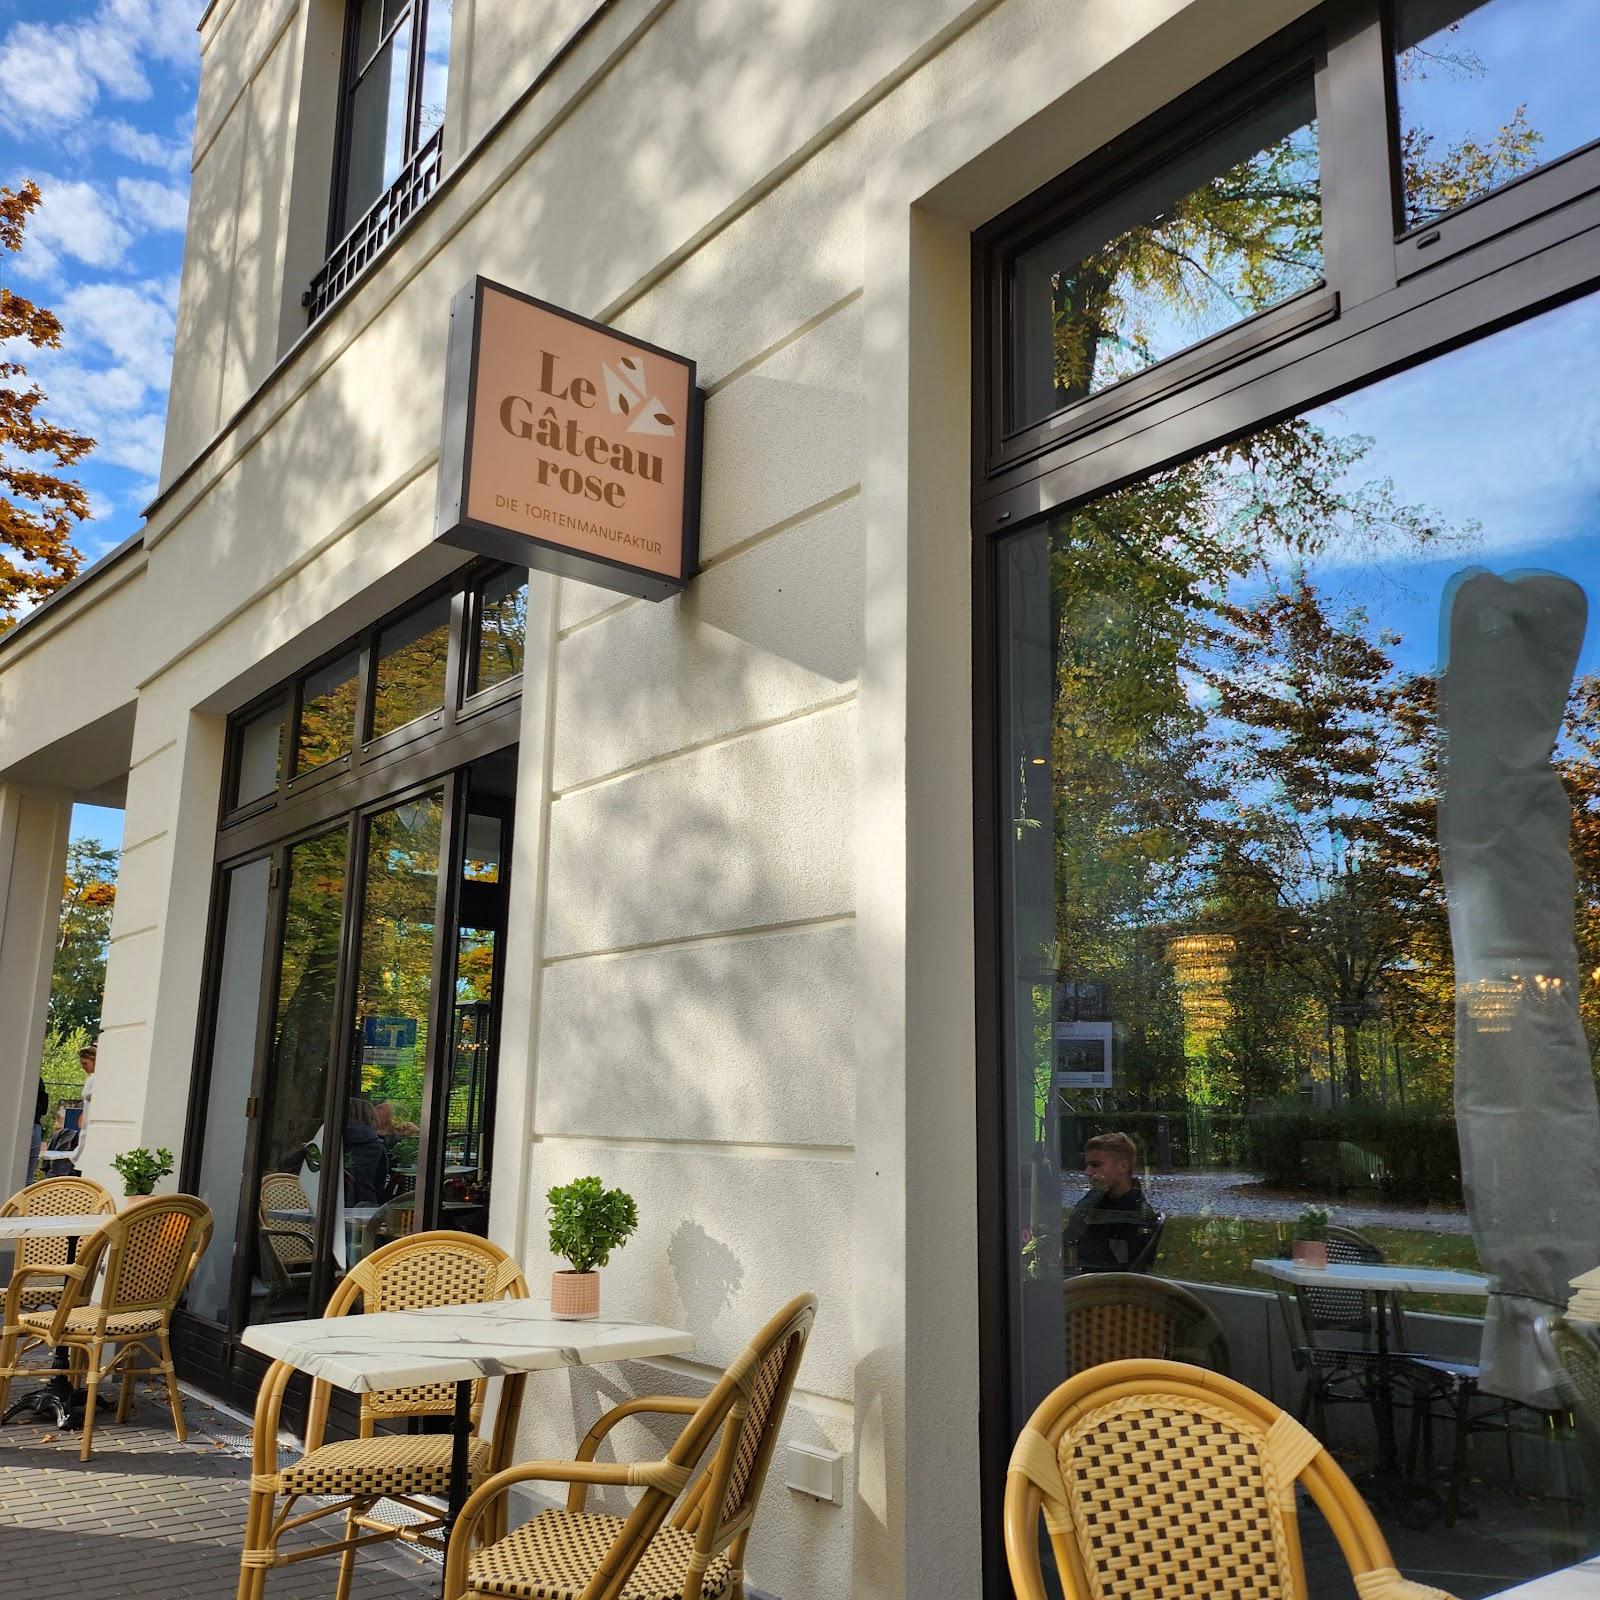 Restaurant "Le Gâteau rose - Café & Tortenmanufaktur" in Bad Saarow